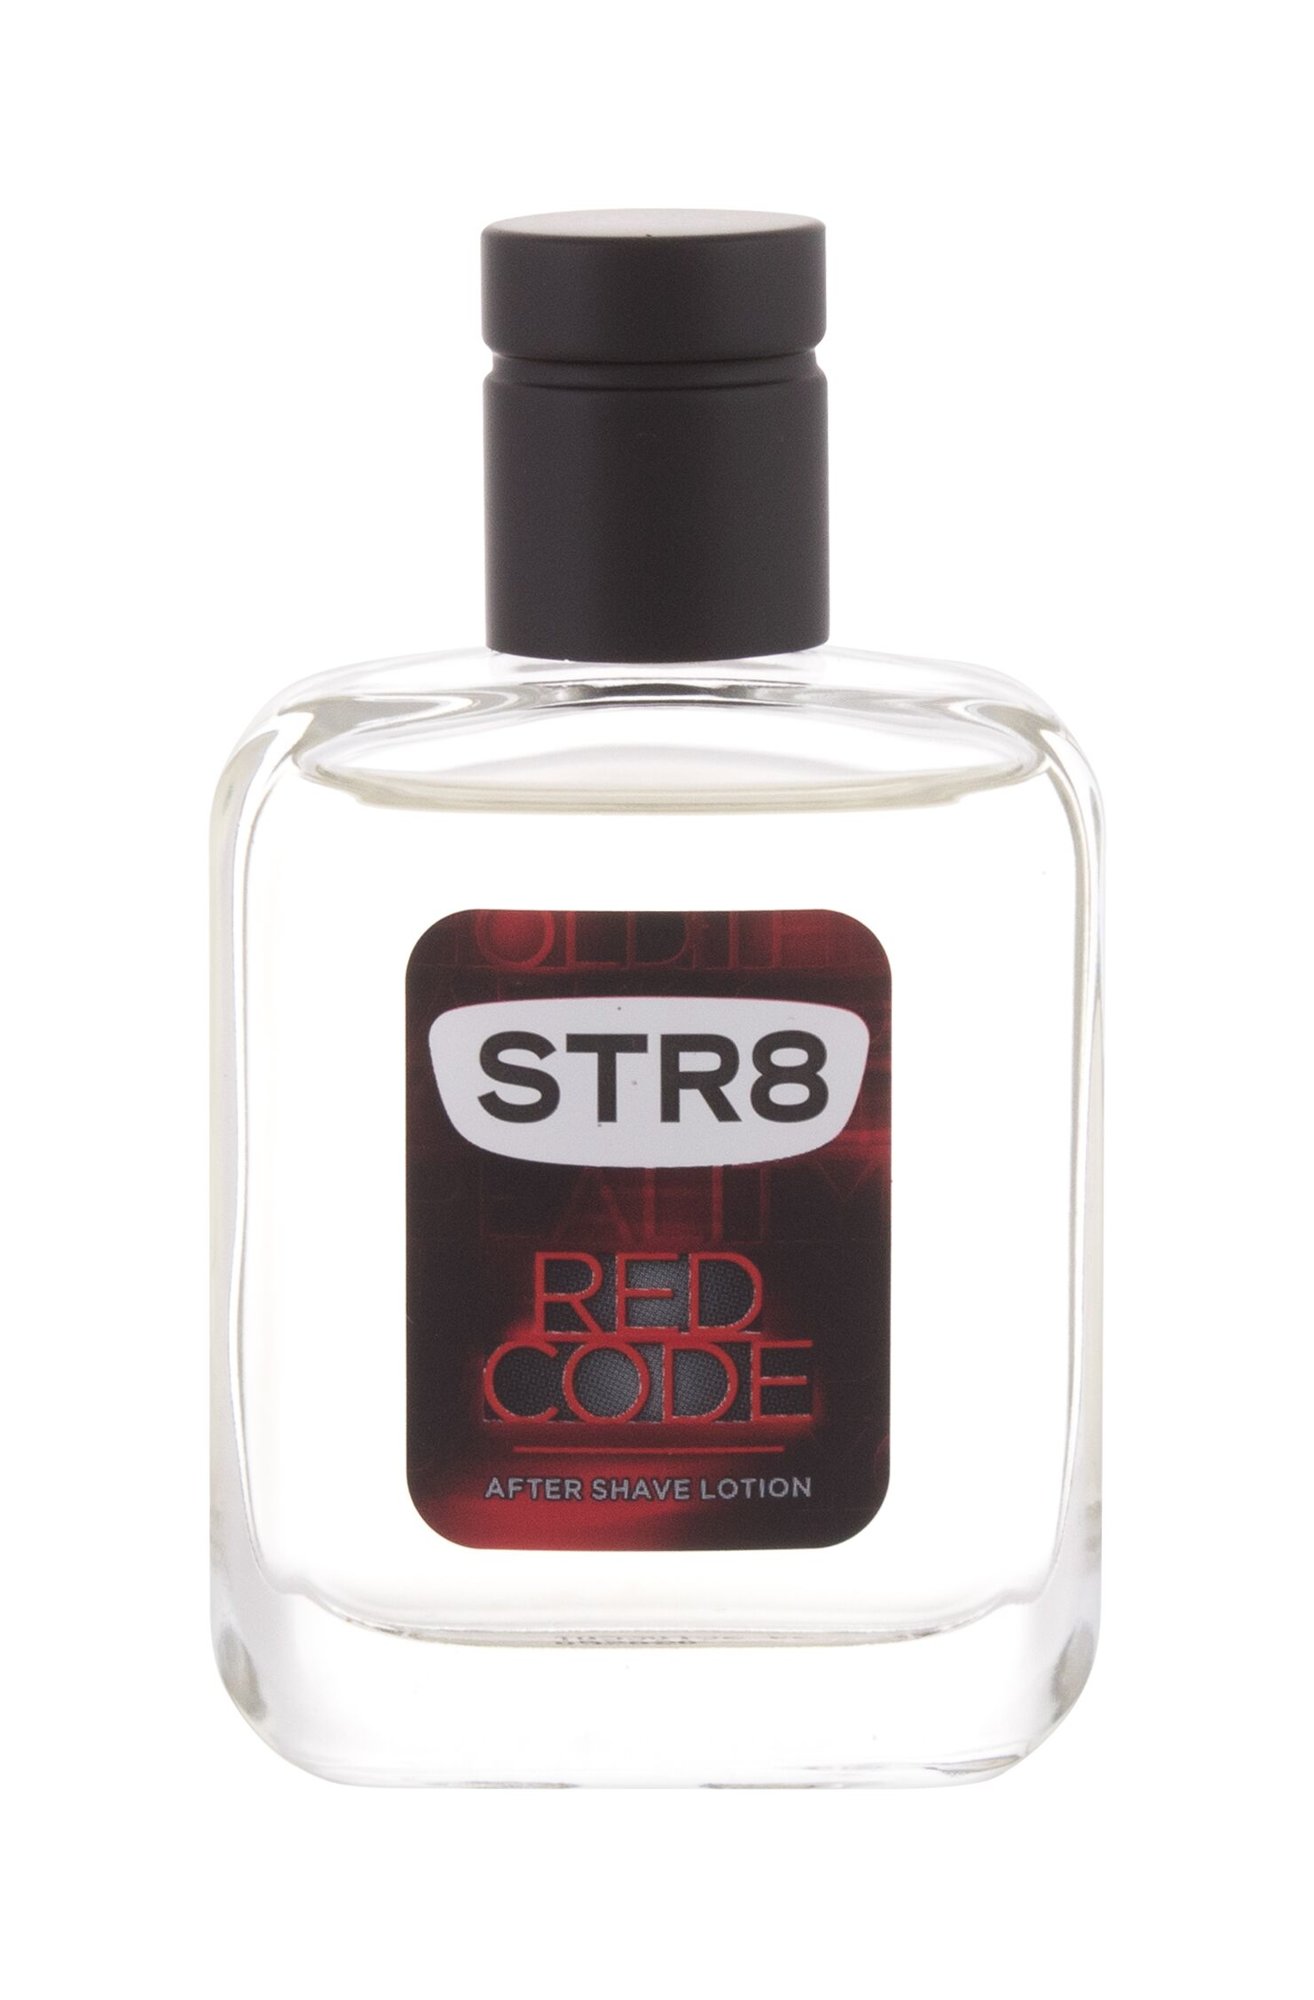 STR8 Red Code 50ml vanduo po skutimosi